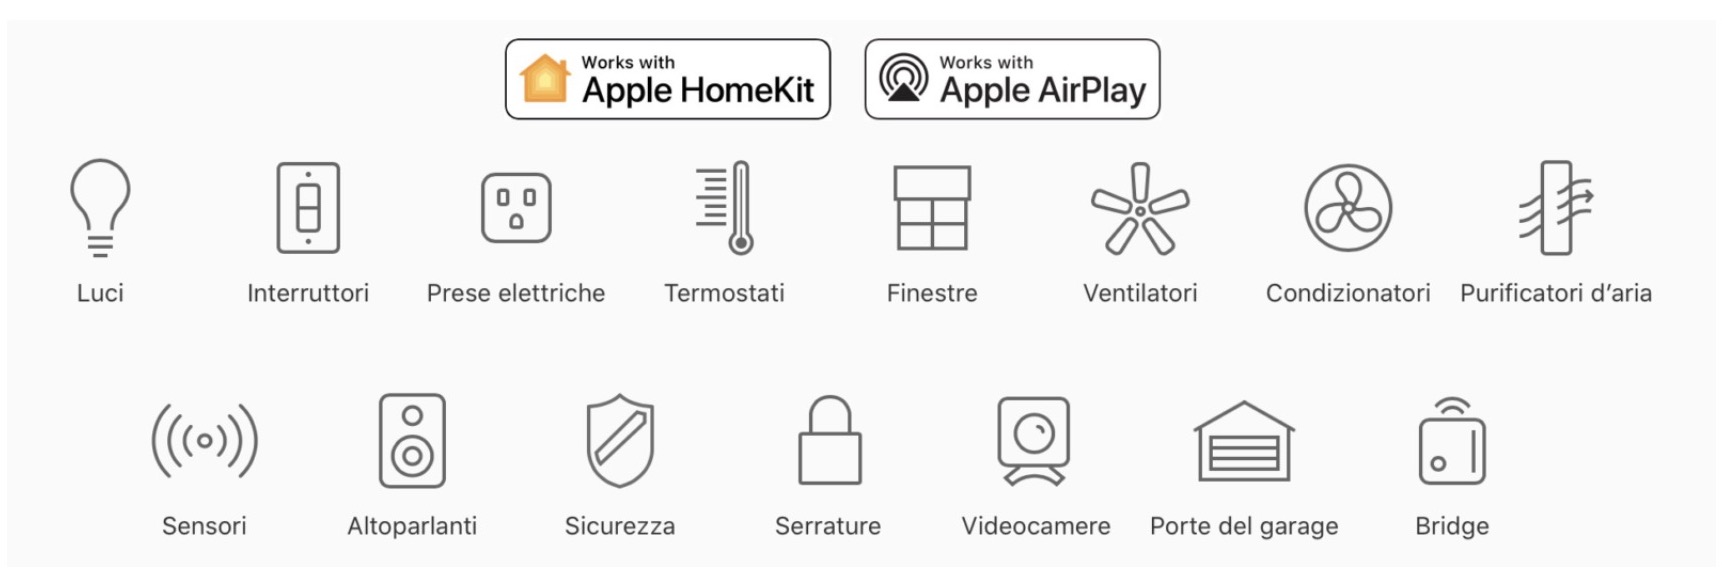 Homekit, la domotica Apple in Casa su iPhone, iPad, Mac, Homepod, Apple TV e Apple Watch: la guida